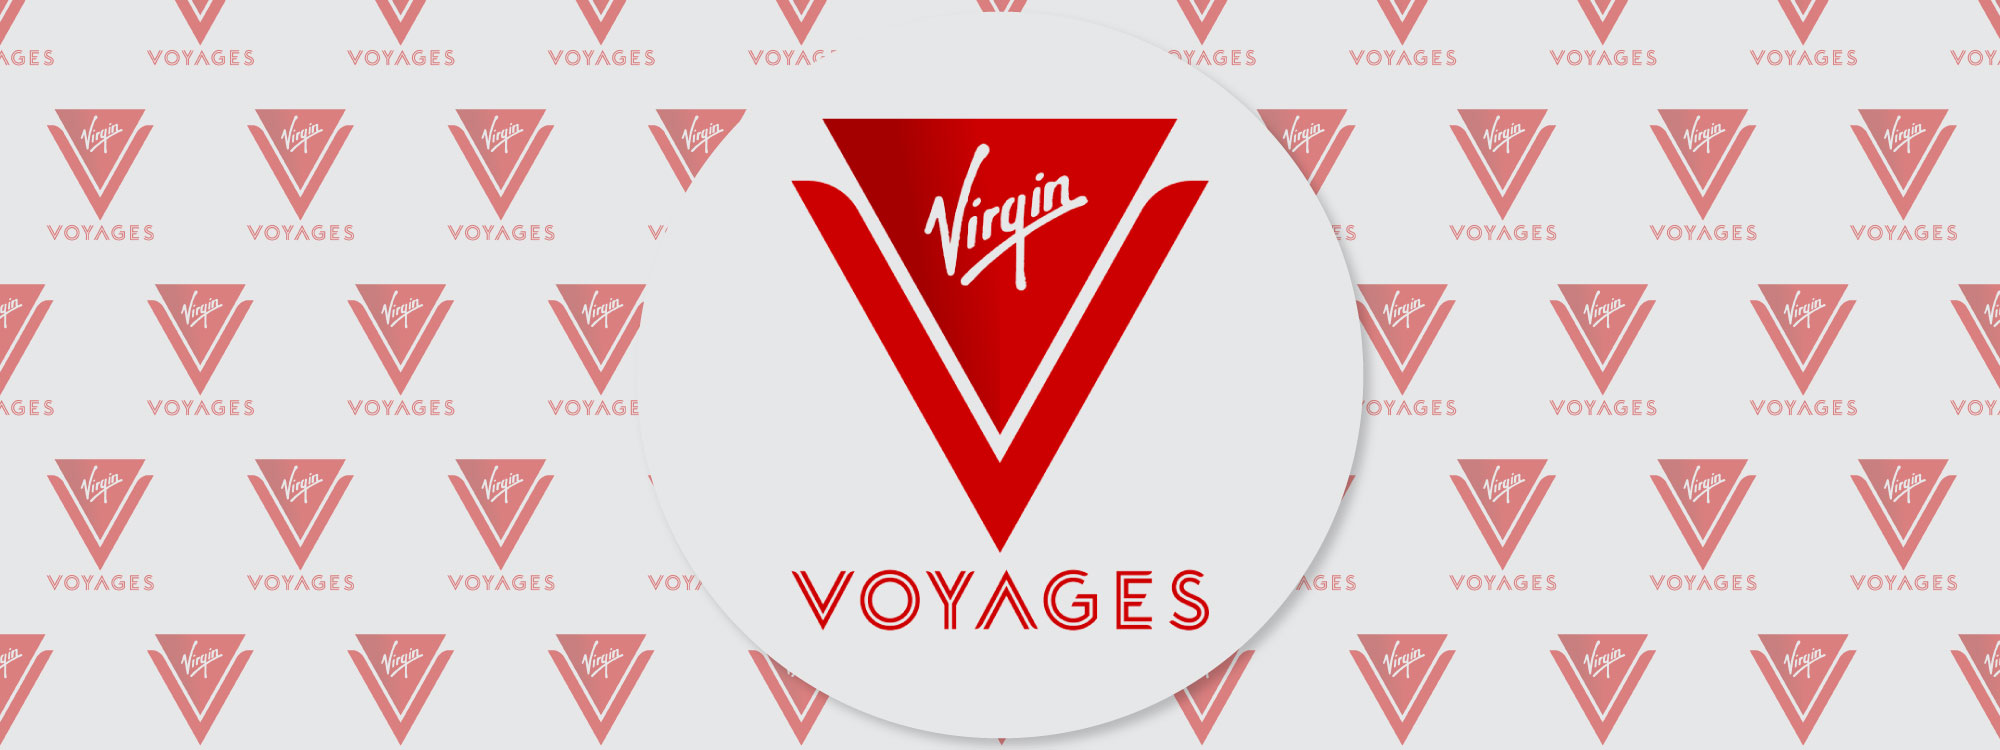 Virgin Voyages Cruise Information